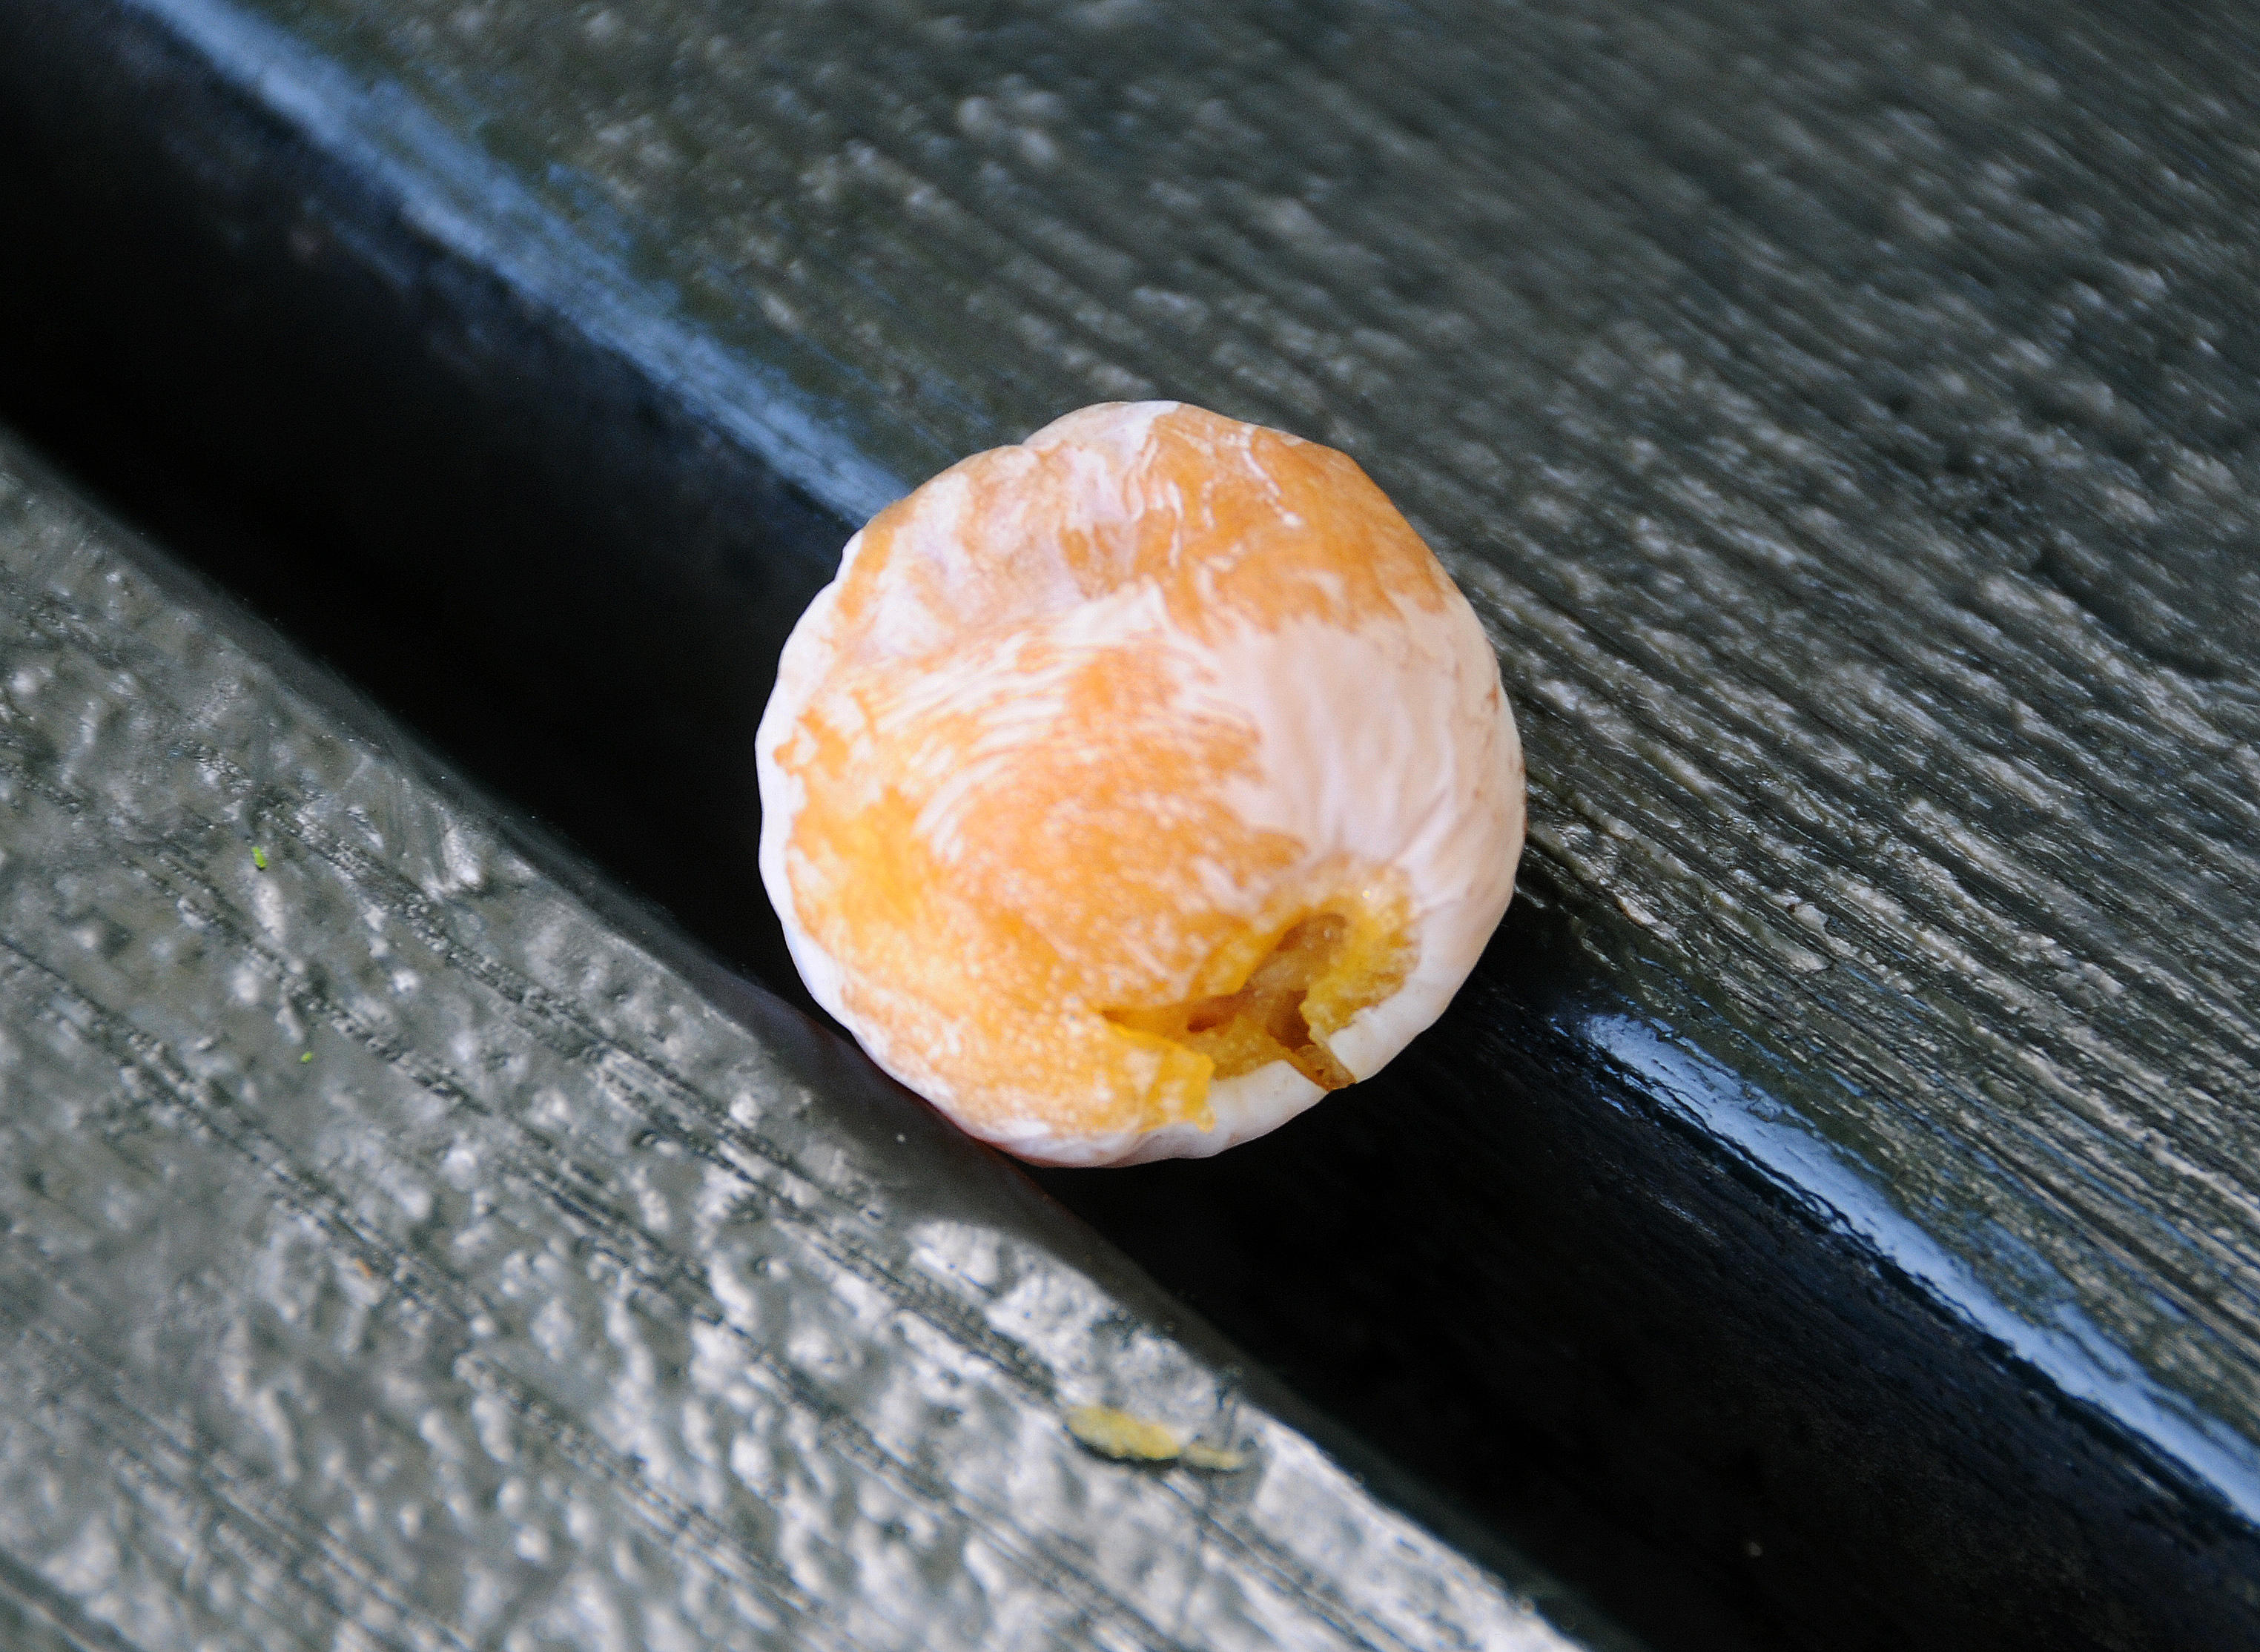 Harlem Meer - Ginkgo Nut on a Bench